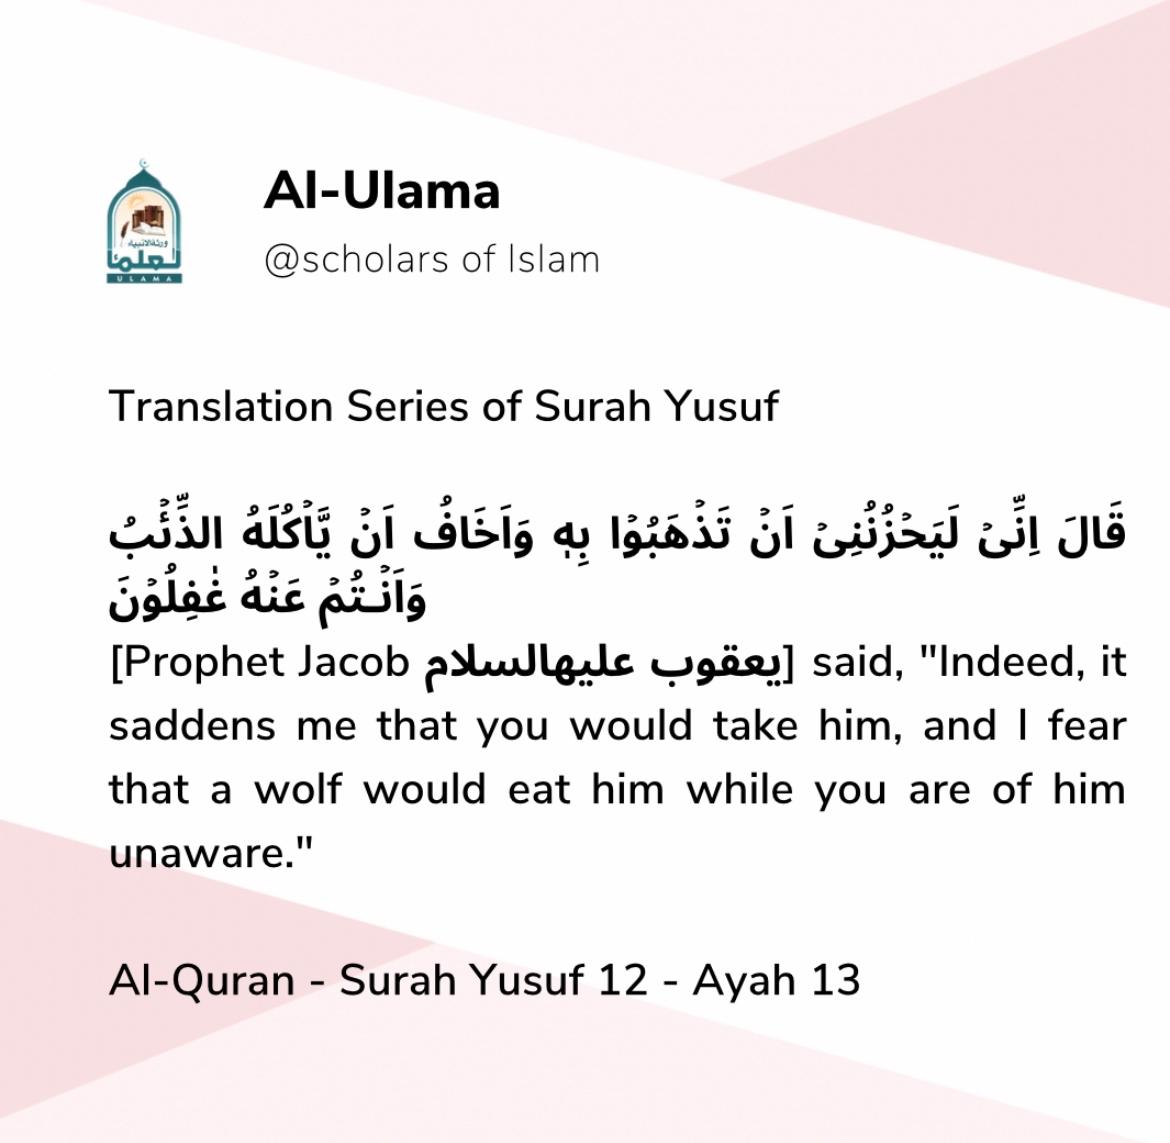 Translation series of surah yusuf